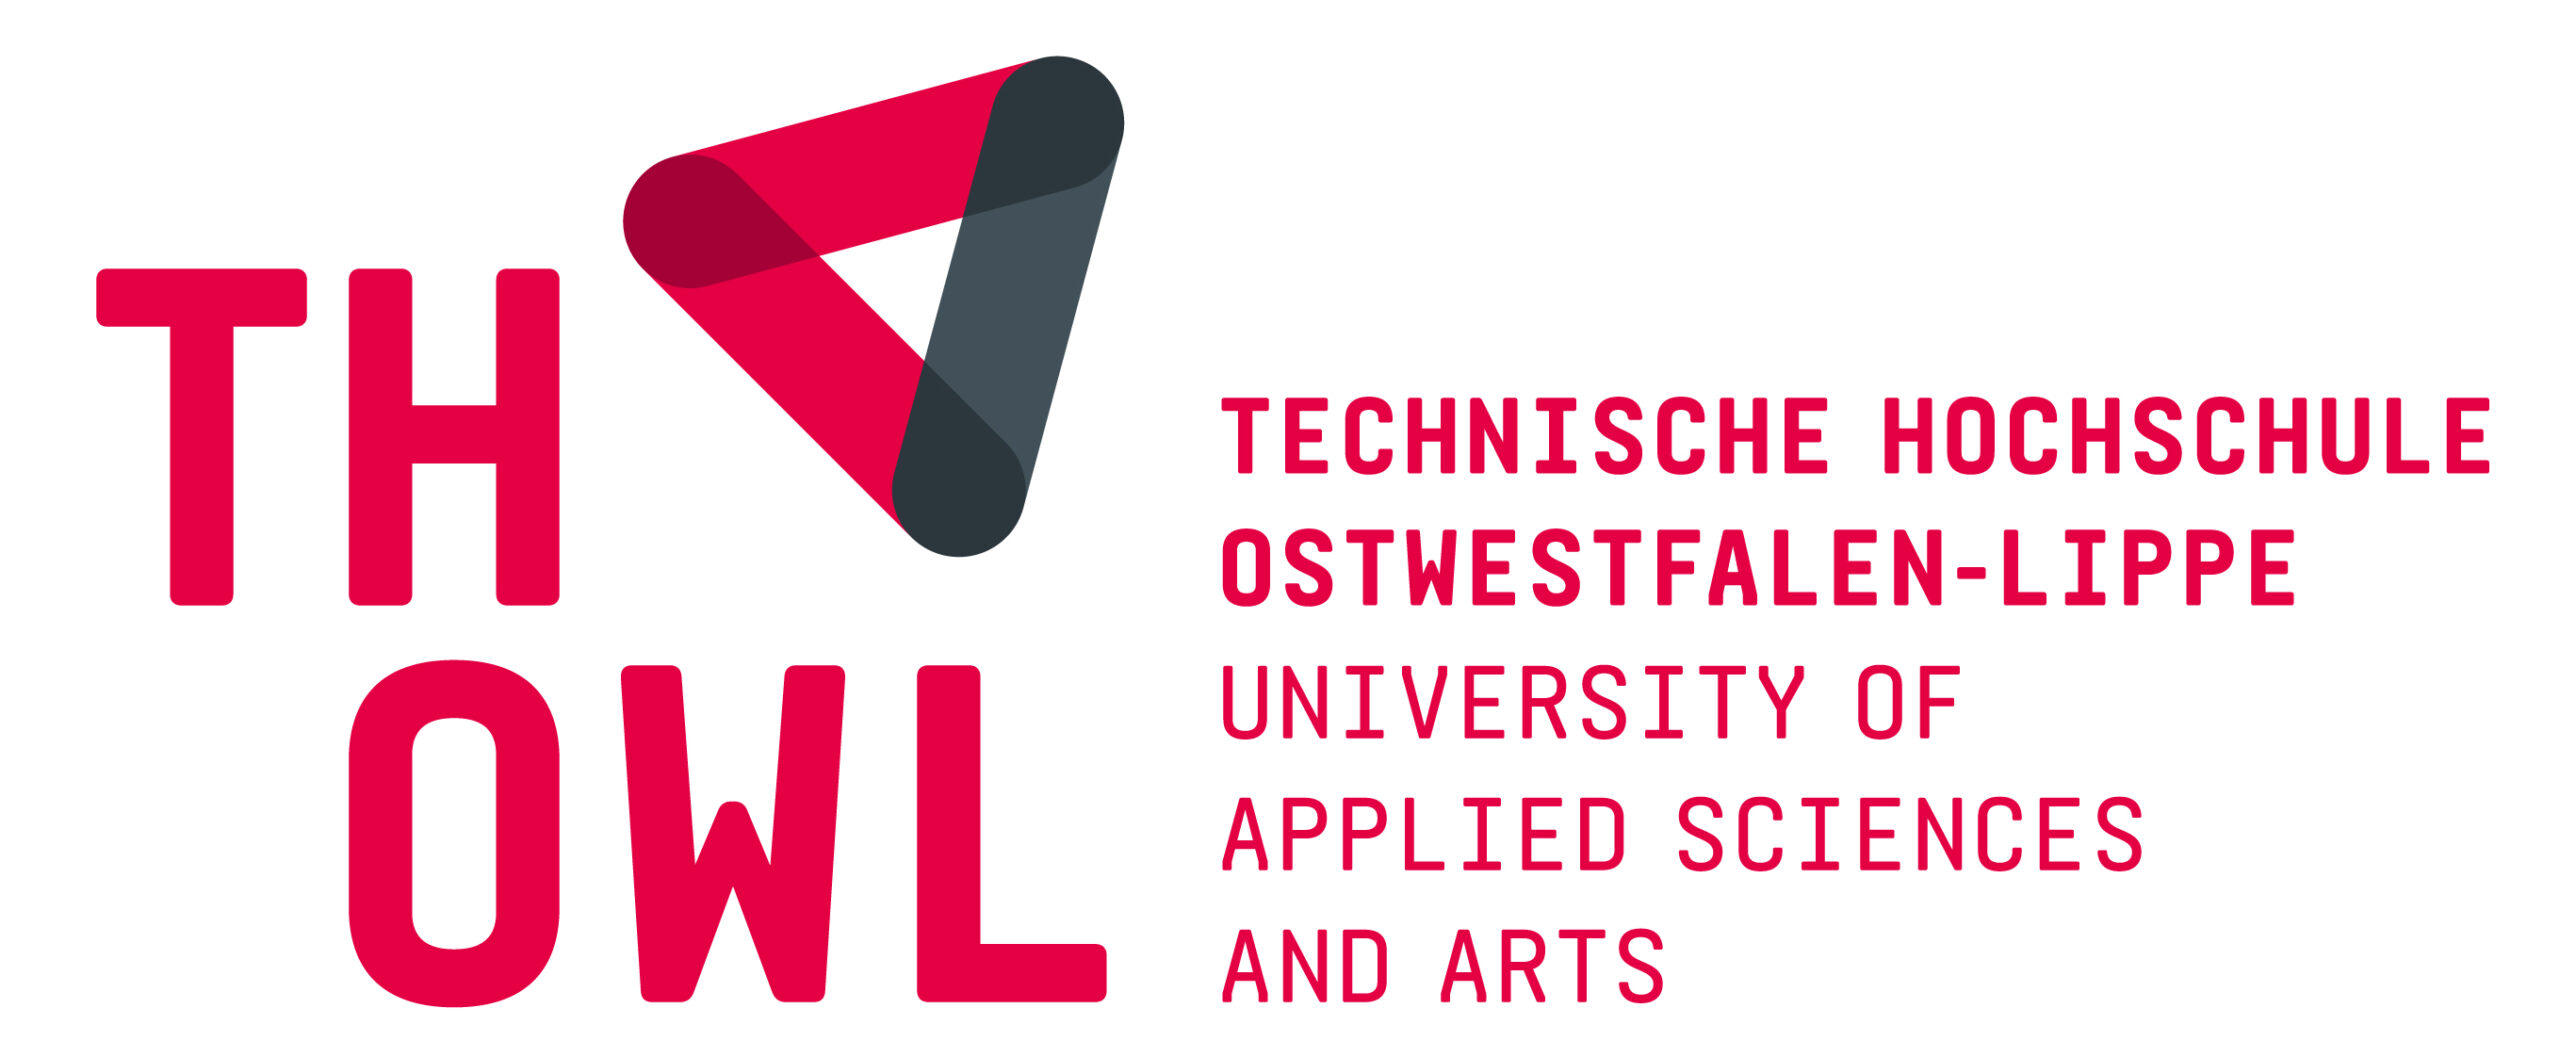 Technische Hochschule OWL